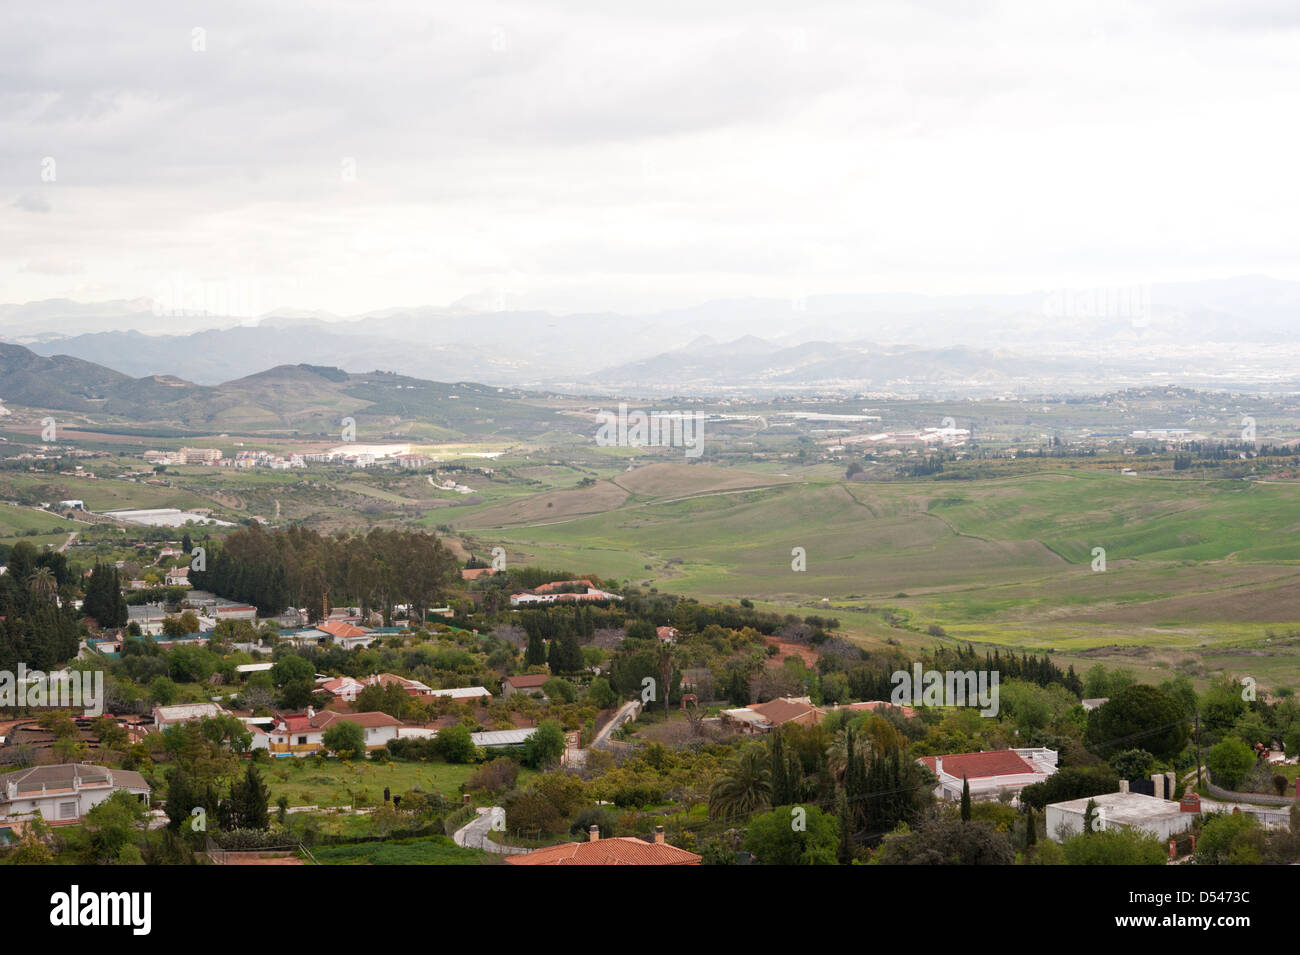 View from the Sierra de Mijas, Alhaurin el Grande, Malaga Province, Spain. Stock Photo